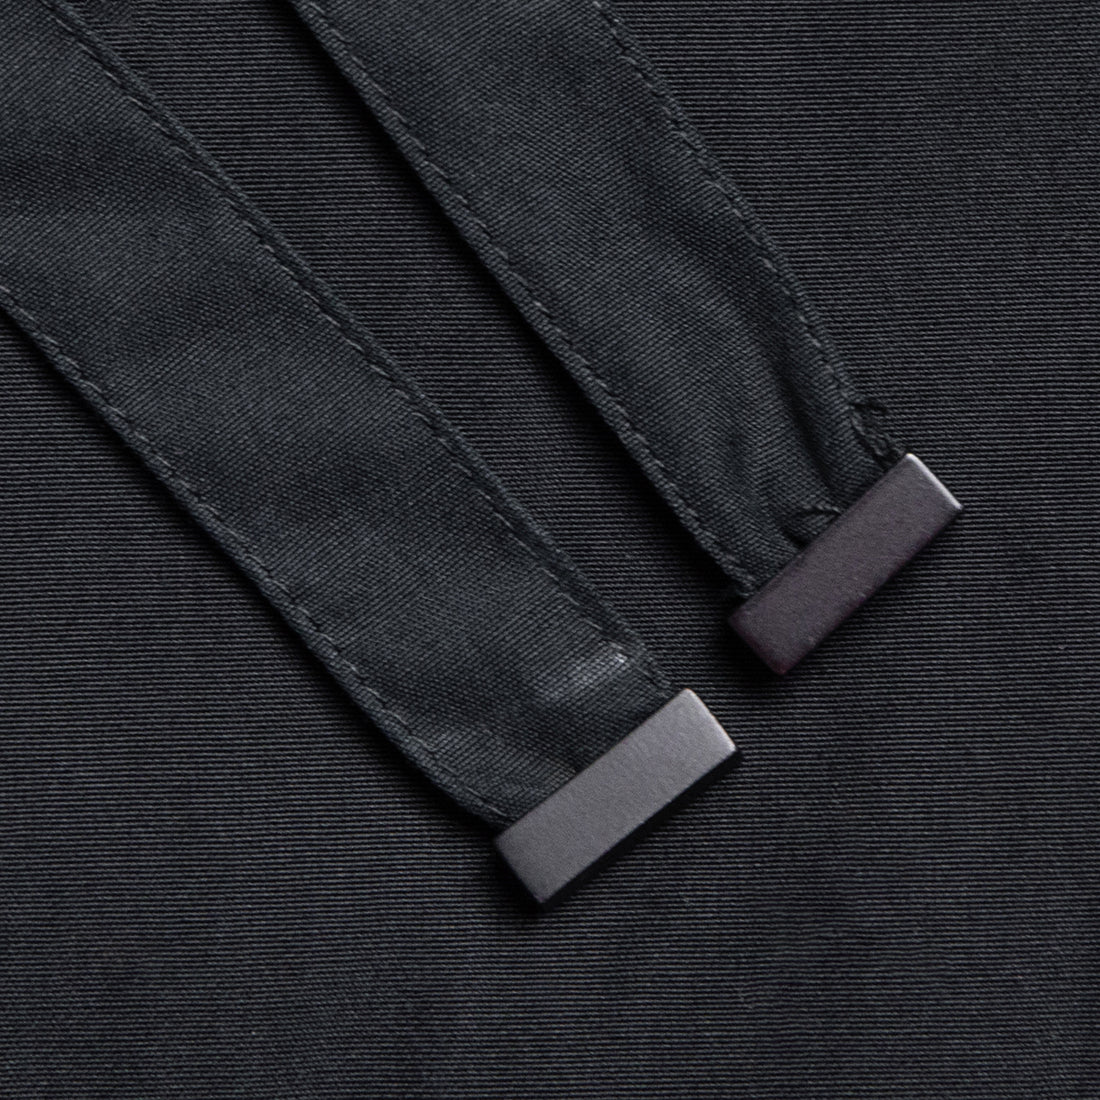 Gucci cotton shirt with narrow waist belt (CLEANING)